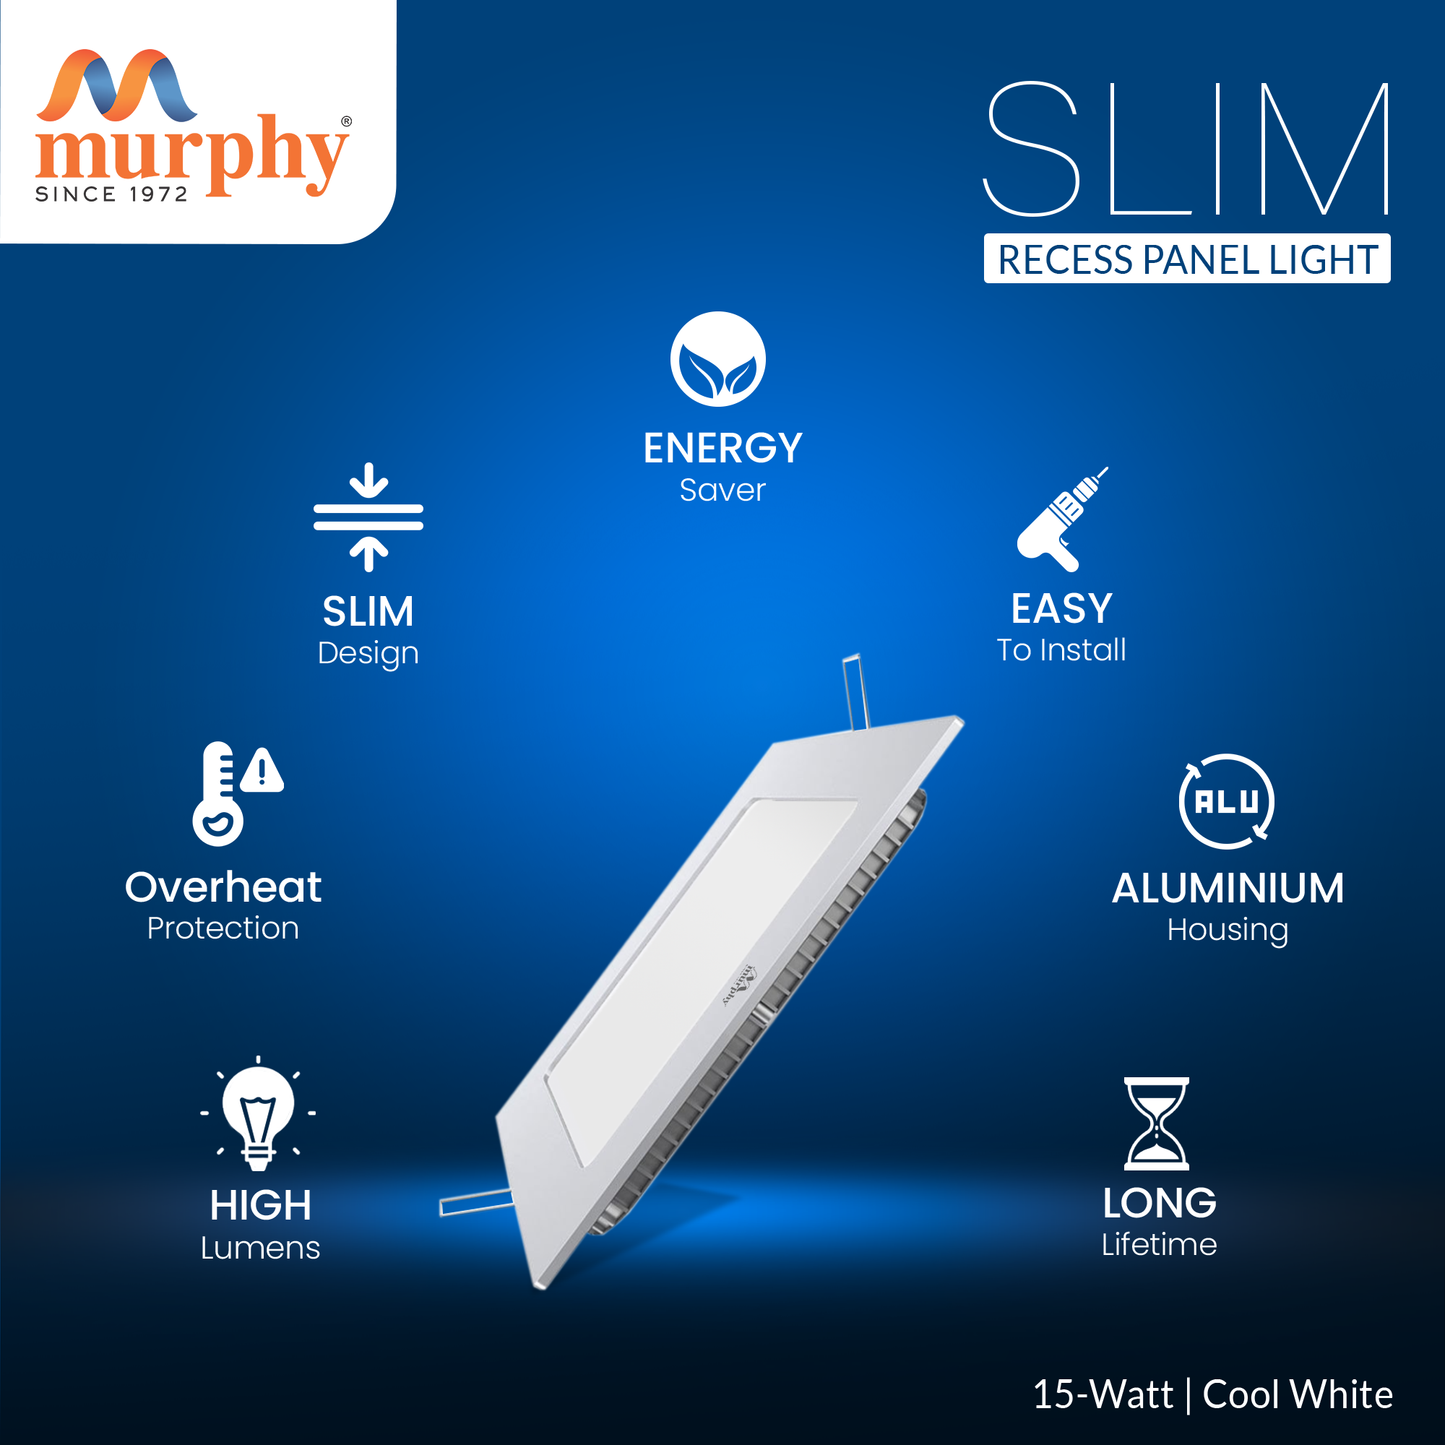 Murphy 15W Slim Square Recess Panel Light